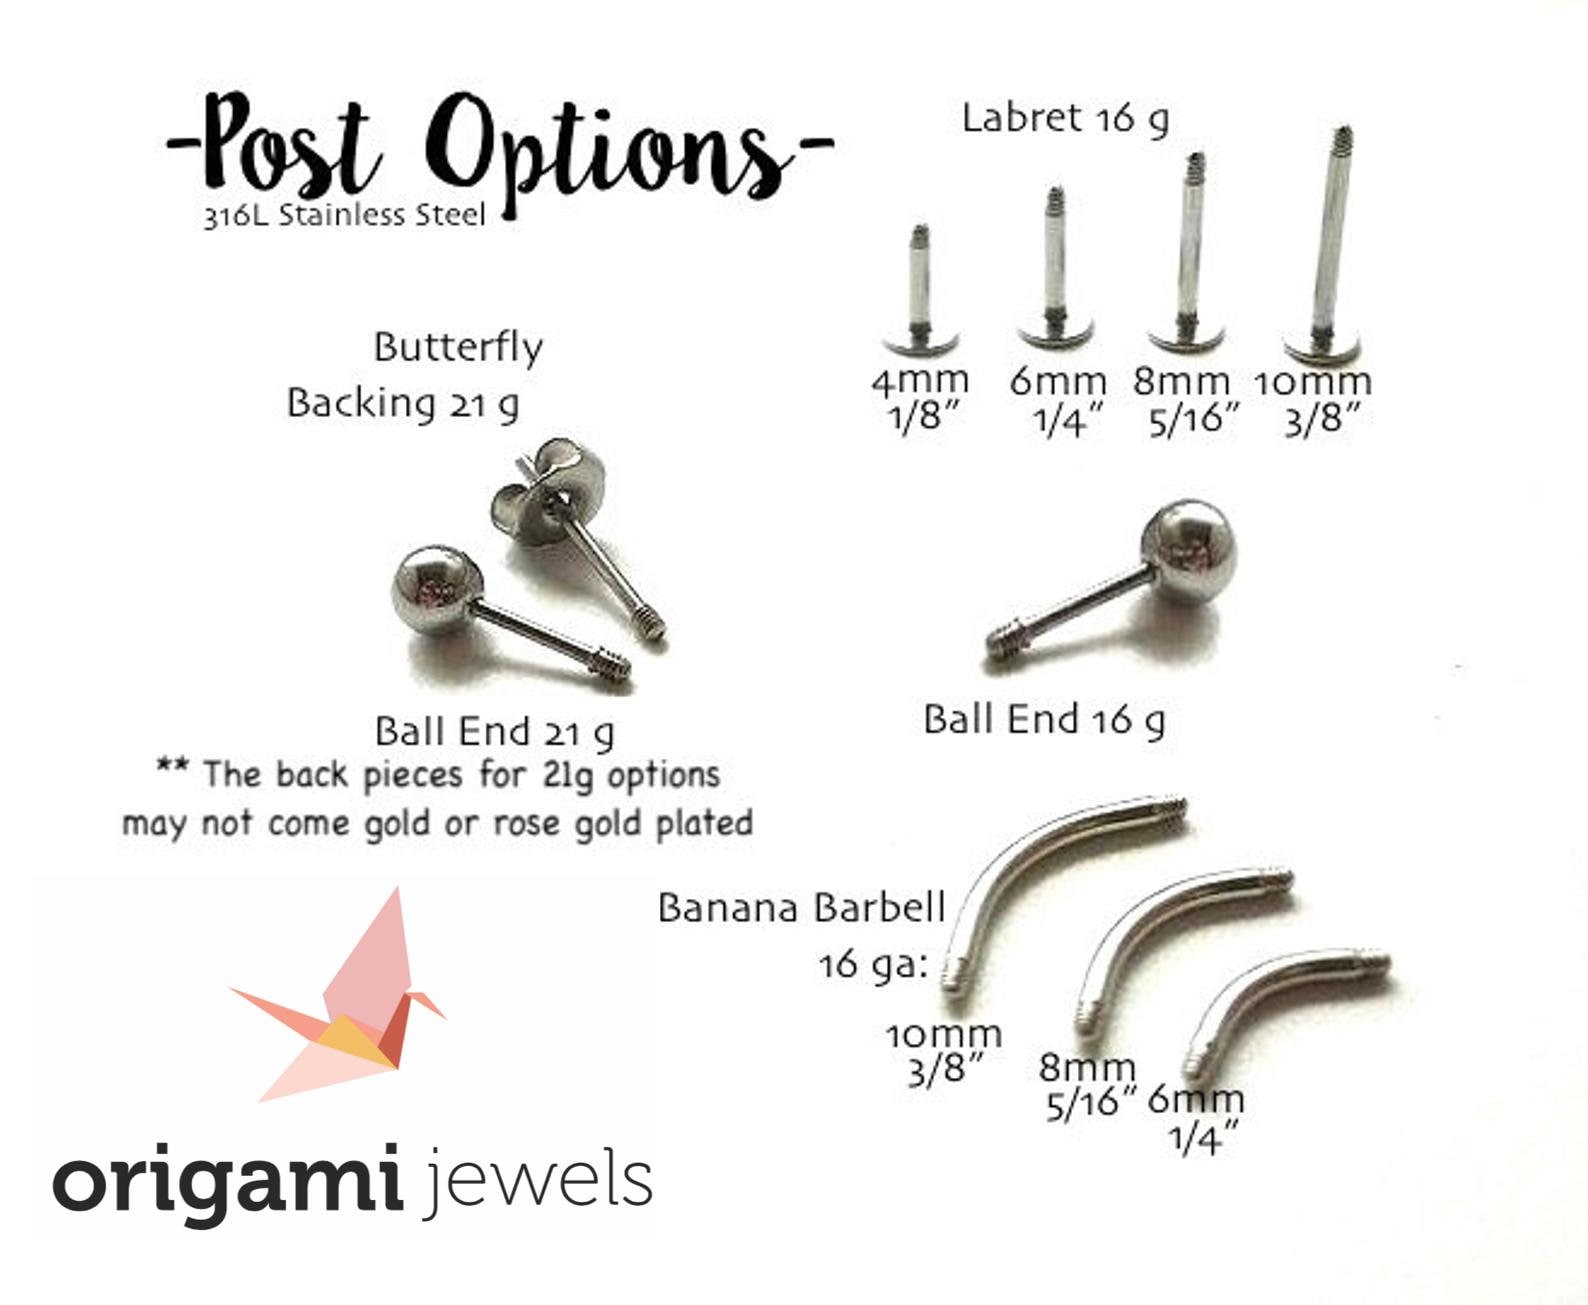 316L Surgical Steel Mens Earring Flatback Screw Stud Earrings Hypoallergenic  Titanium Ear Piercing Studs for Women (B-5 pair-9mm) - Yahoo Shopping